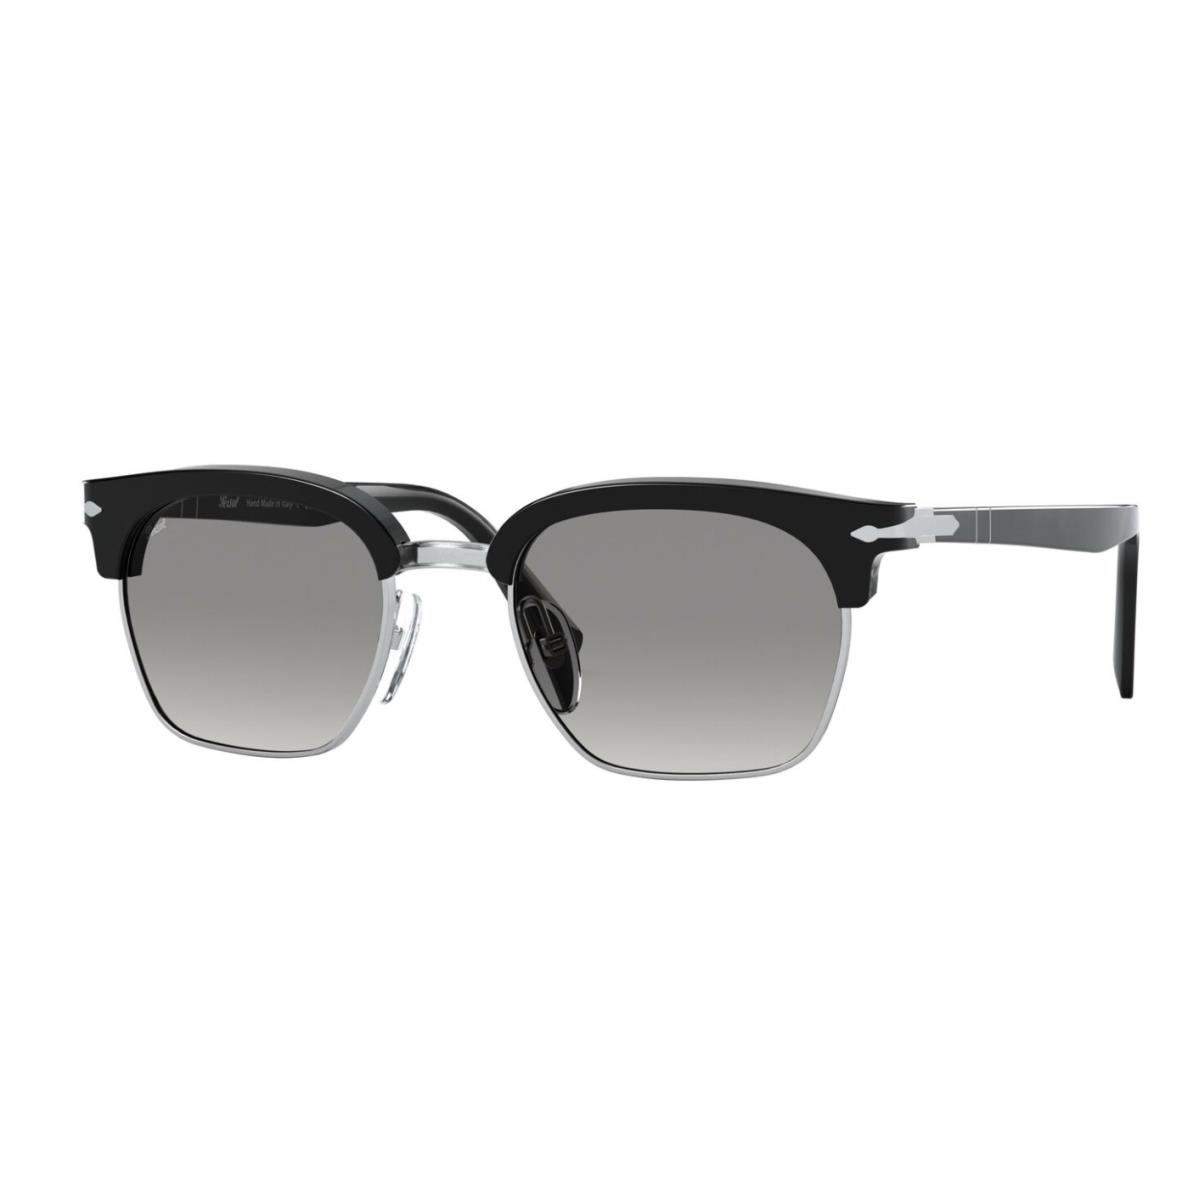 Persol sunglasses  - Black , Black & Silver Frame, Grey Gradient Polarized Lens